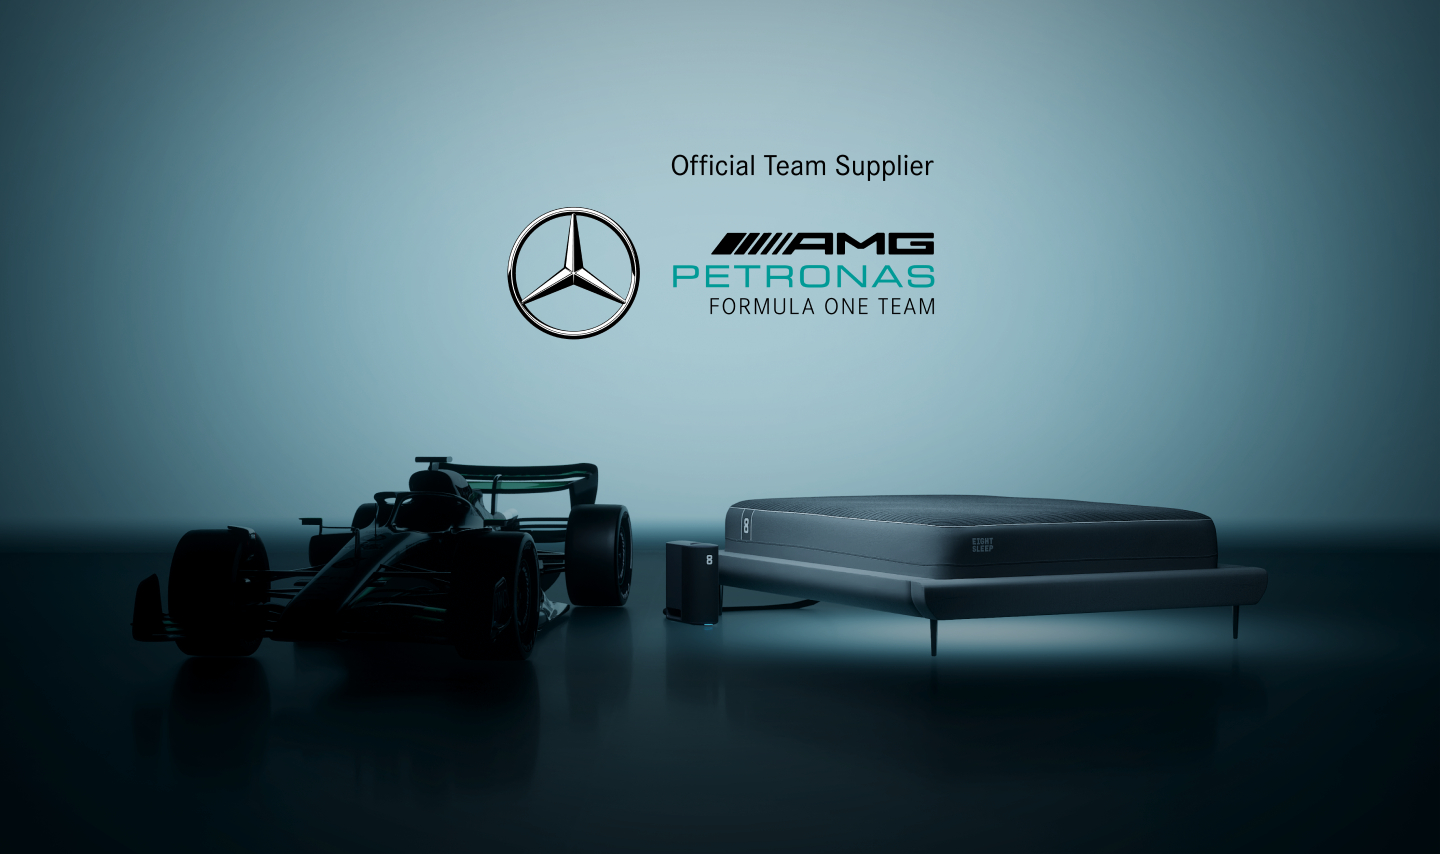 Spies Hecker ramène l'équipe de Formule 1 Mercedes-AMG Petronas à